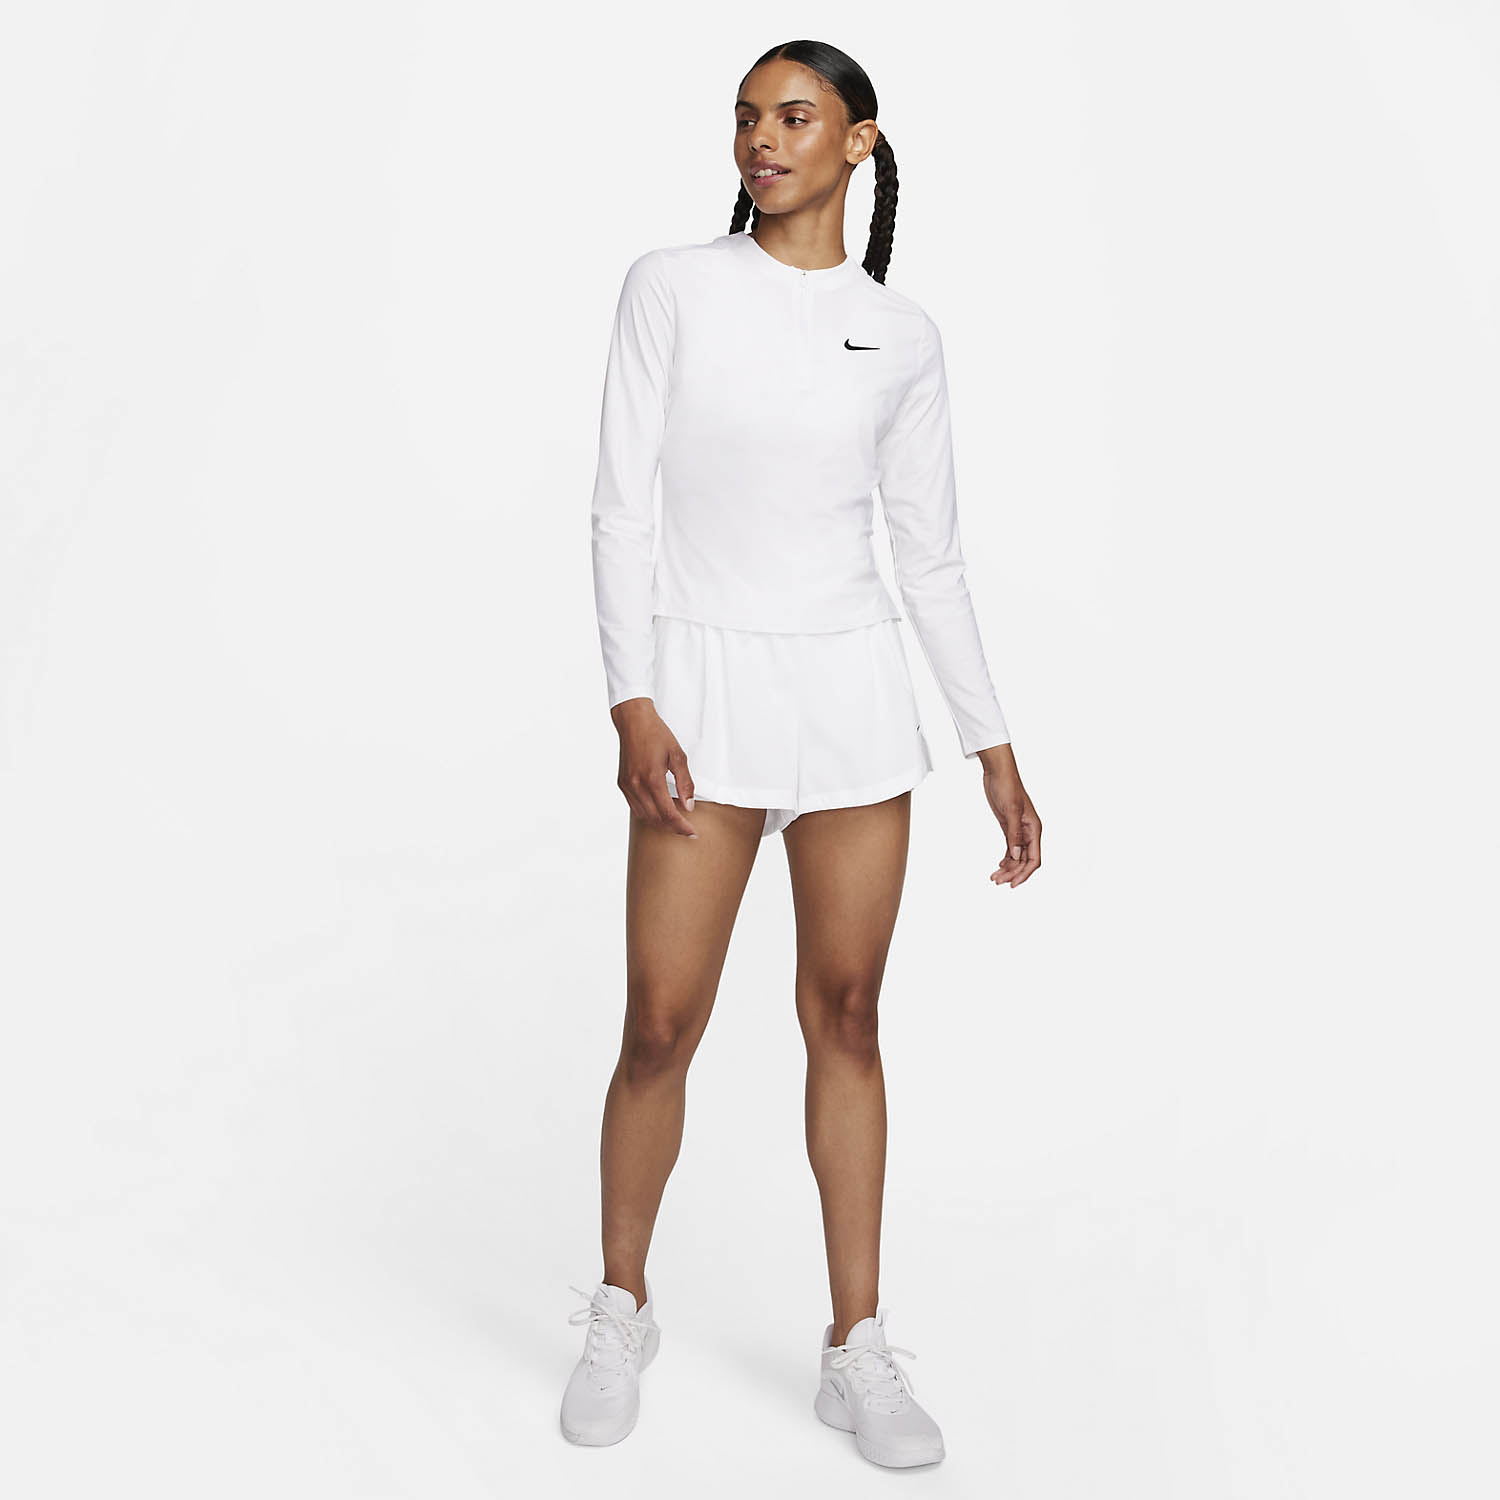 Nike Advantage Shirt - White/Black